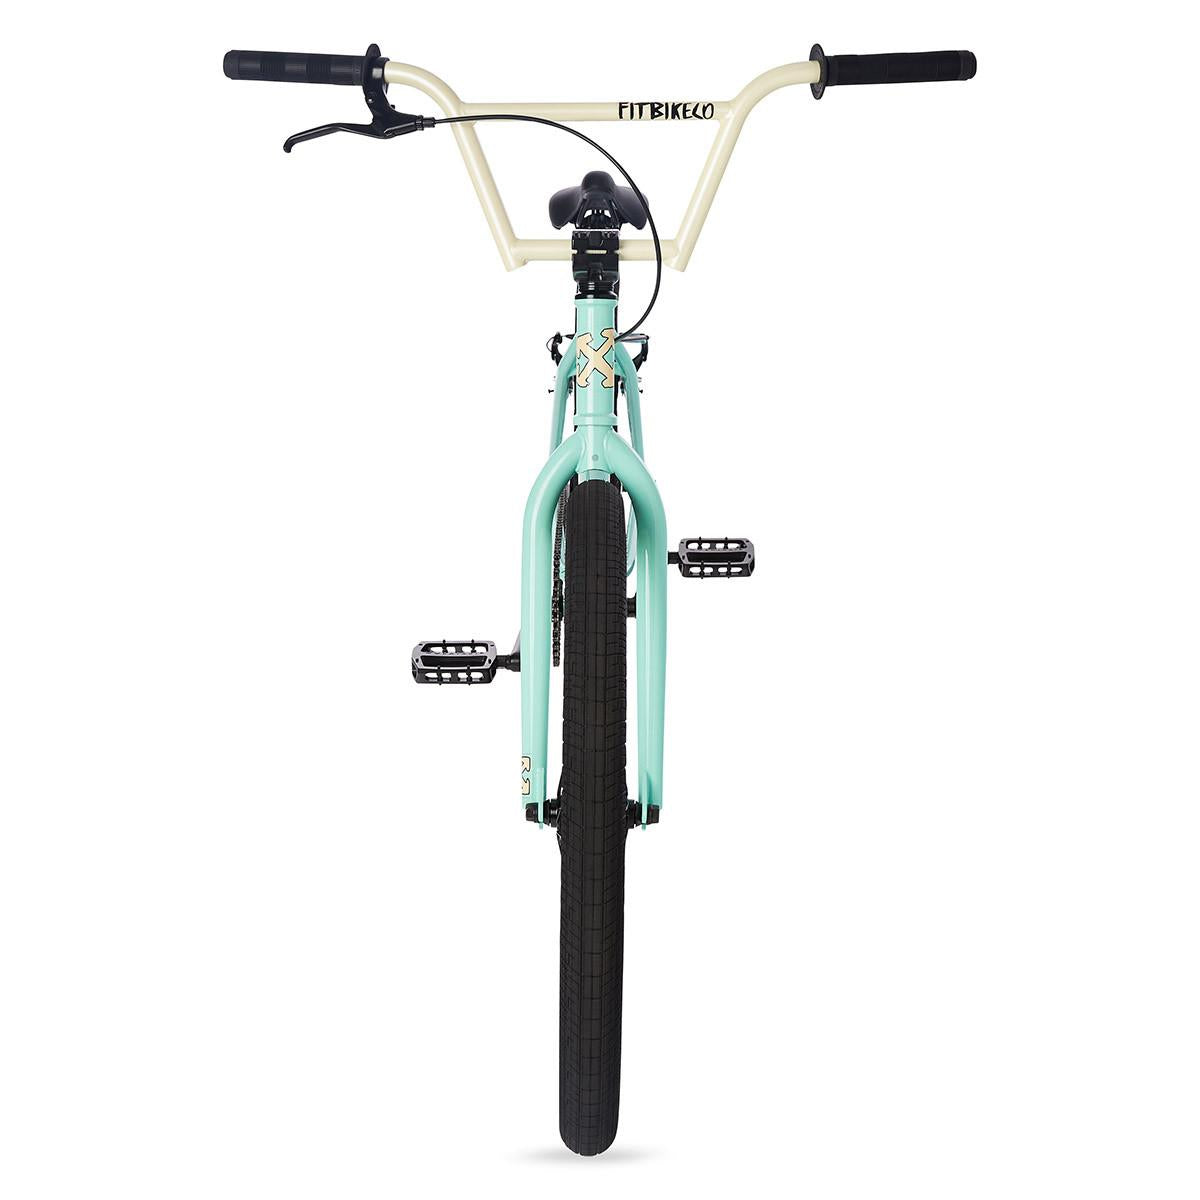 Fit CR 26 " BMX Bicicleta 2023